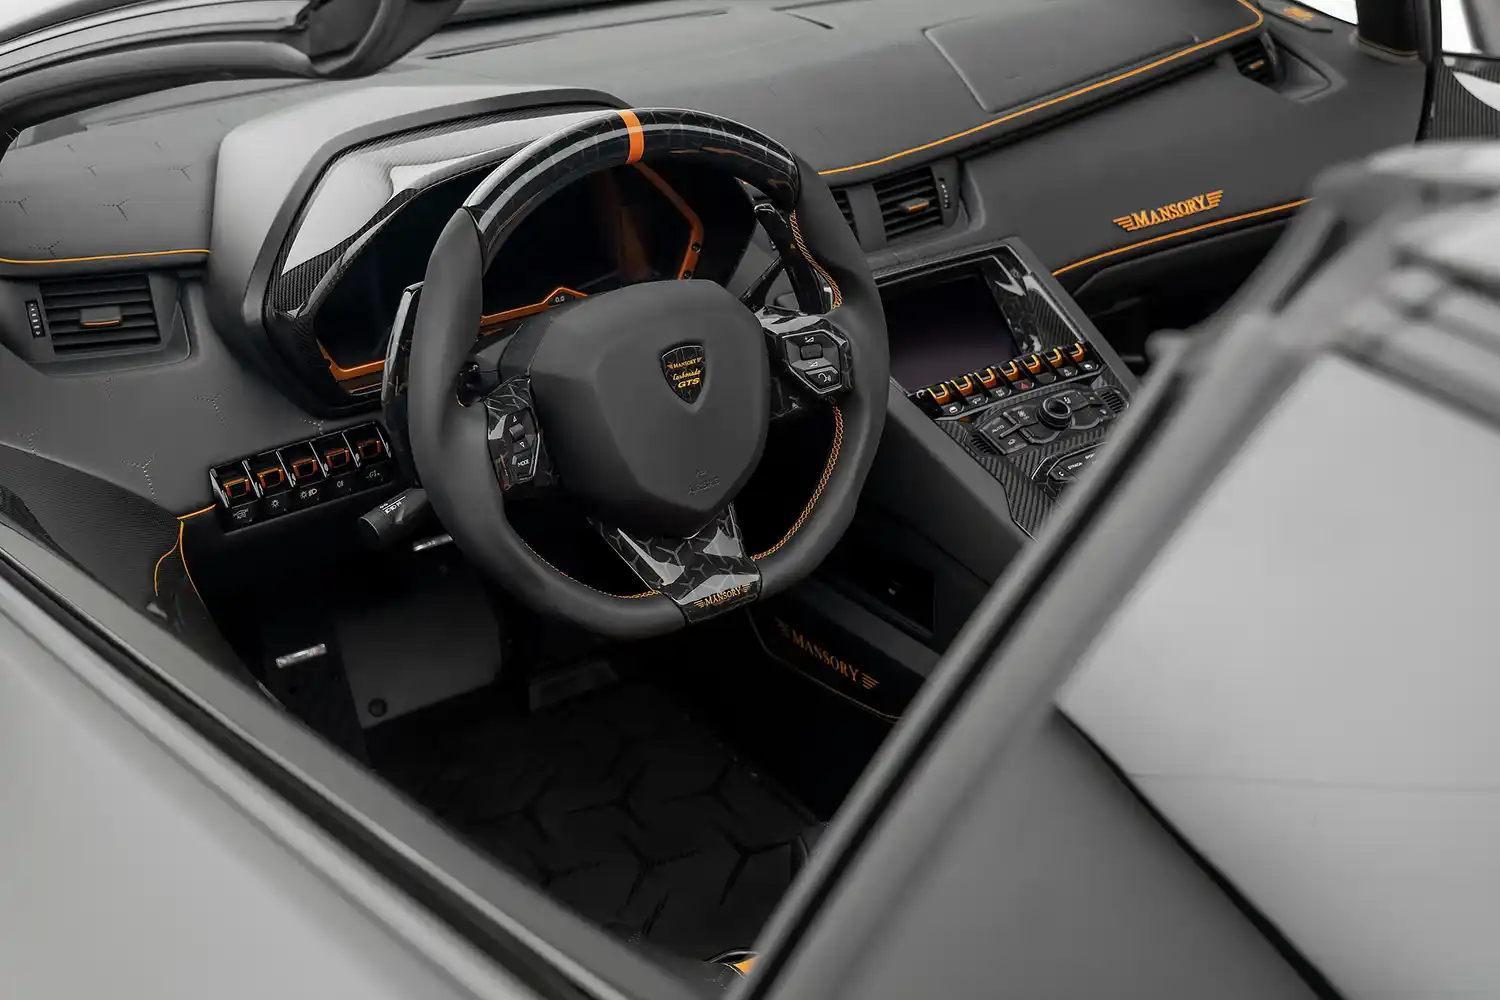 MANSORY Carbonado GTS Lamborghini Aventador SVJ Roadster